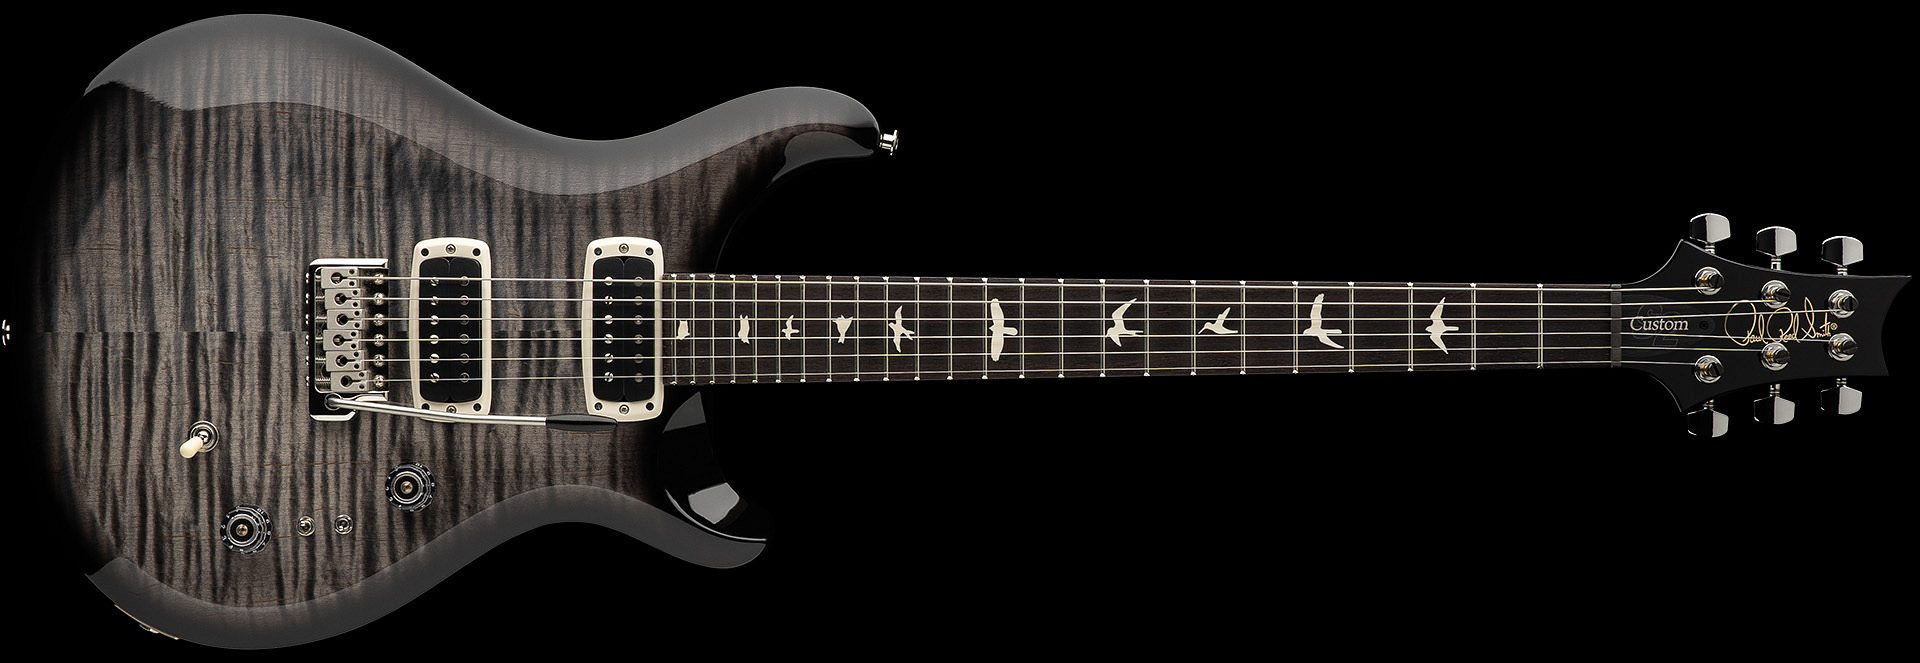 PRS Guitars USA S2 Custom 24-08 GS - Faded Gray Black Burst 112819::GS: